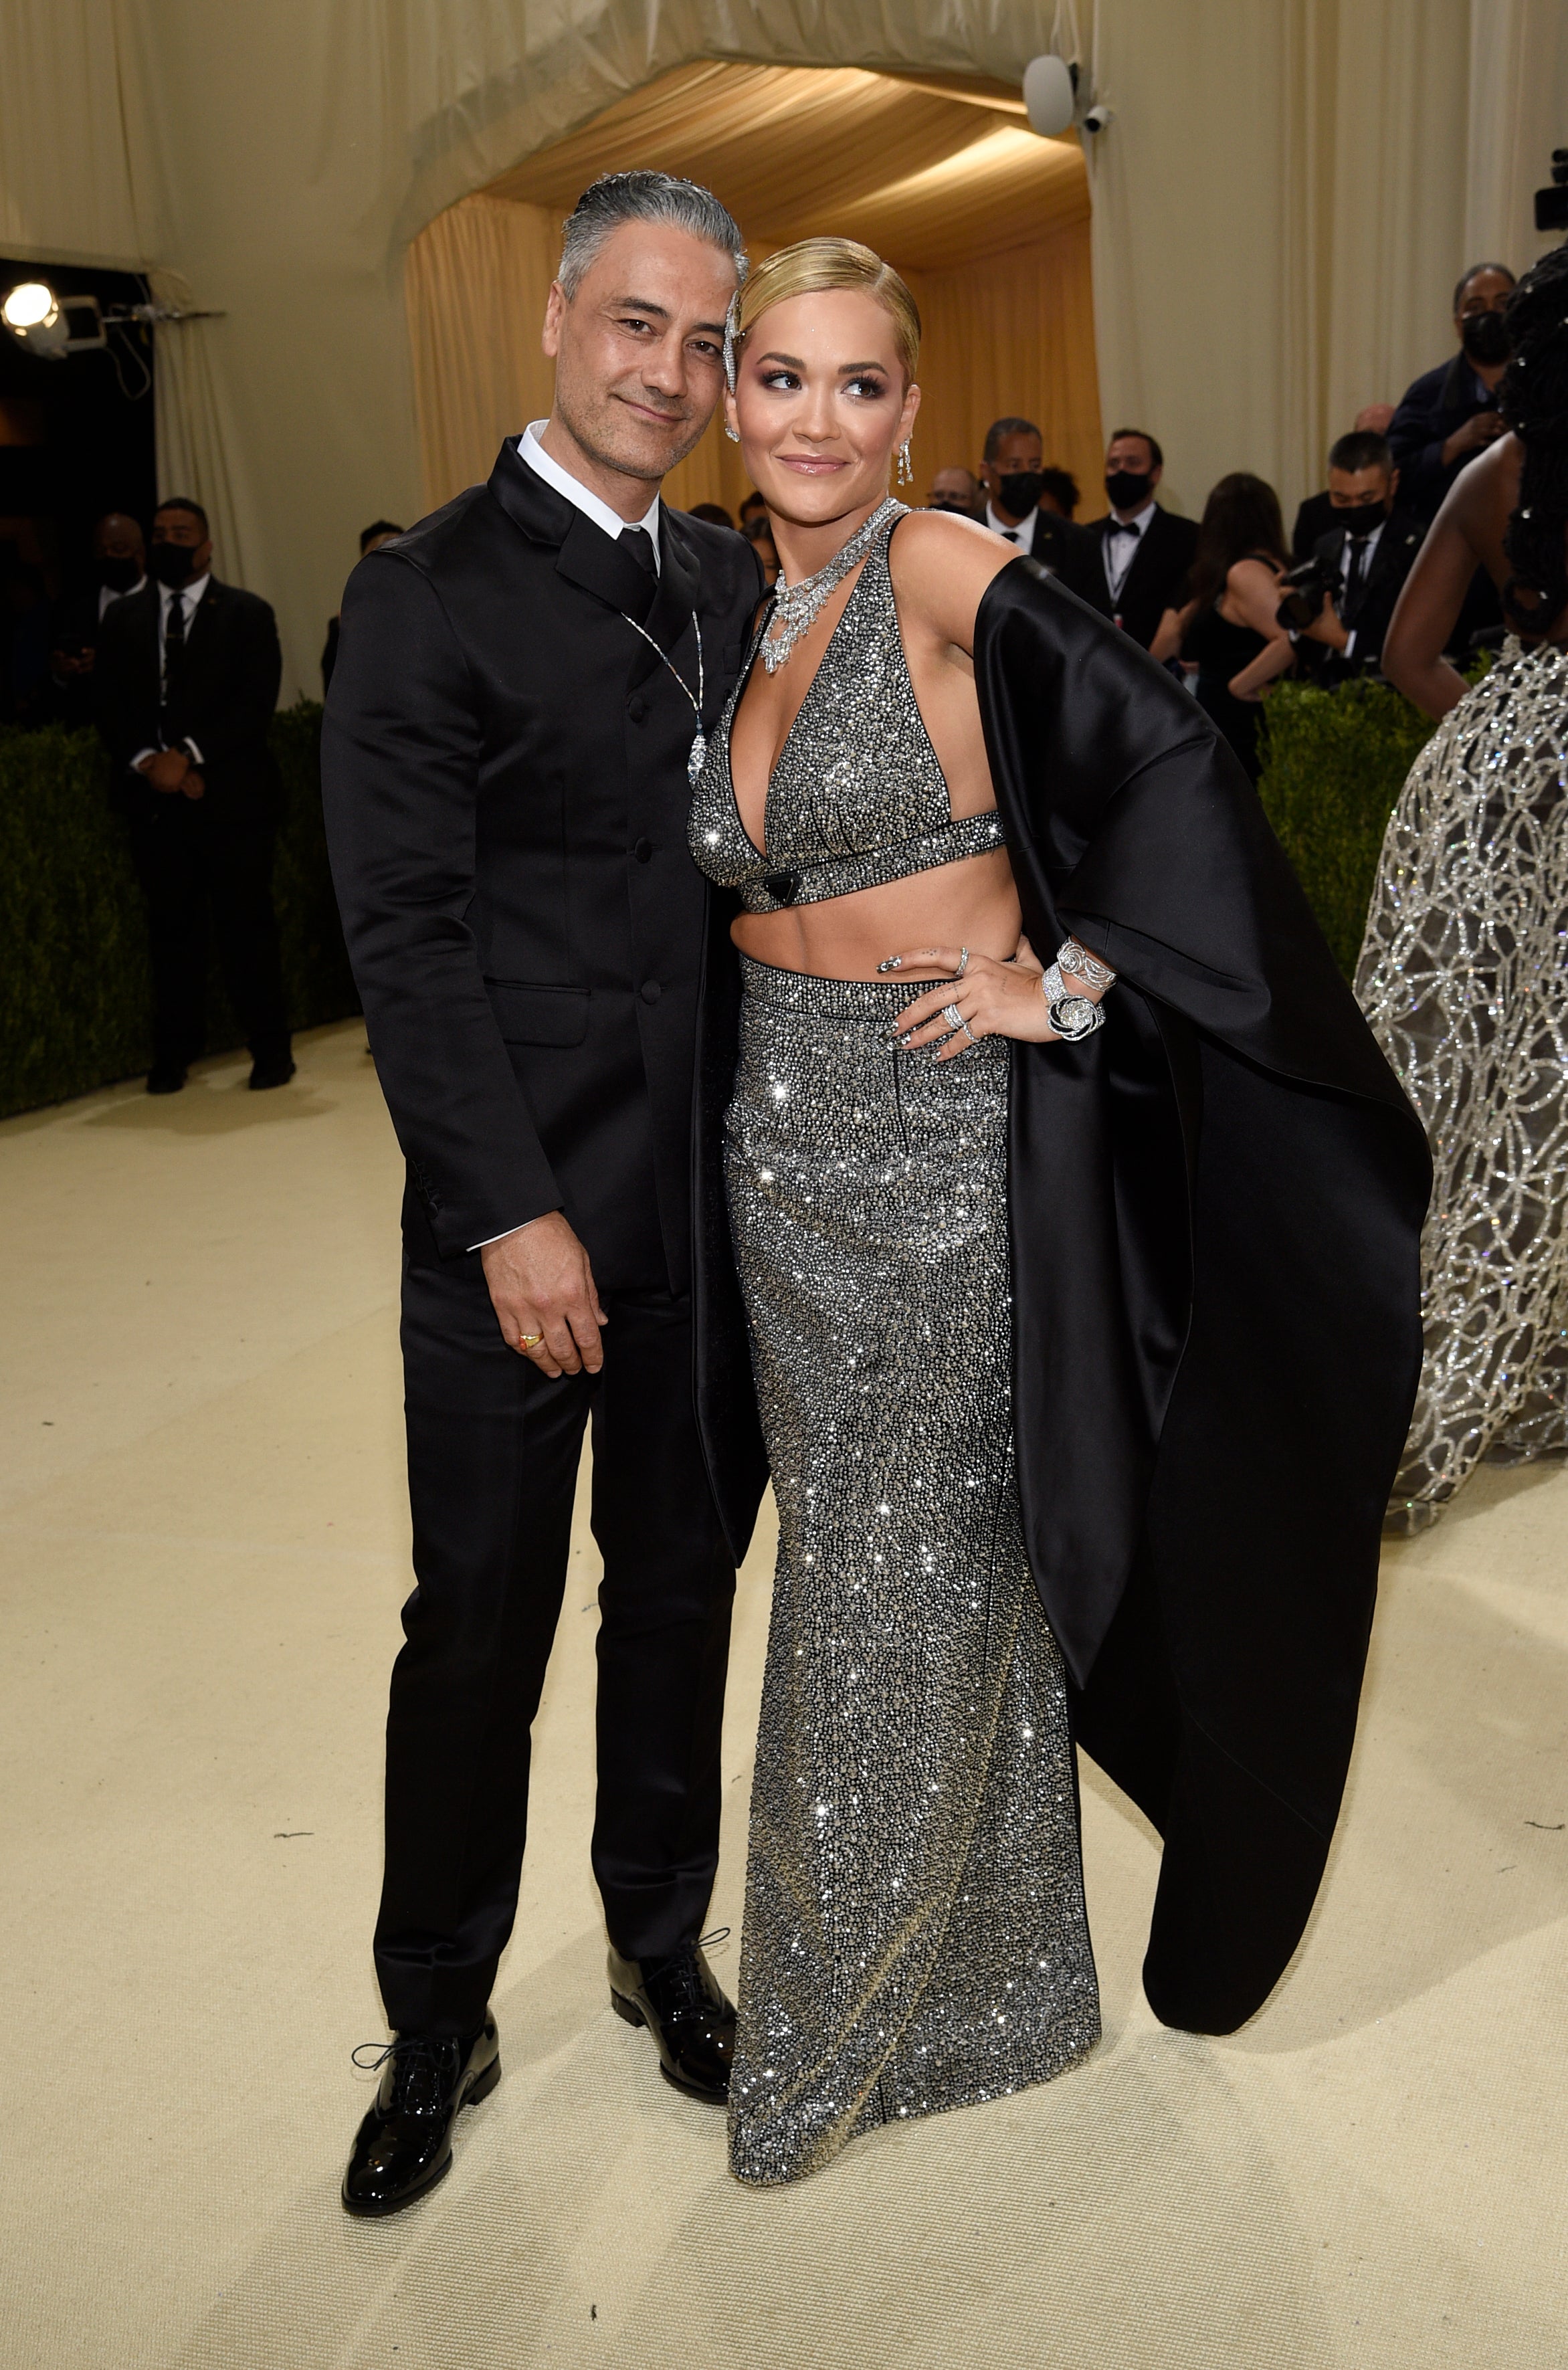 Taika Waititi and Rita Ora attended the Met Gala together (Evan Agostini/Invision/AP)